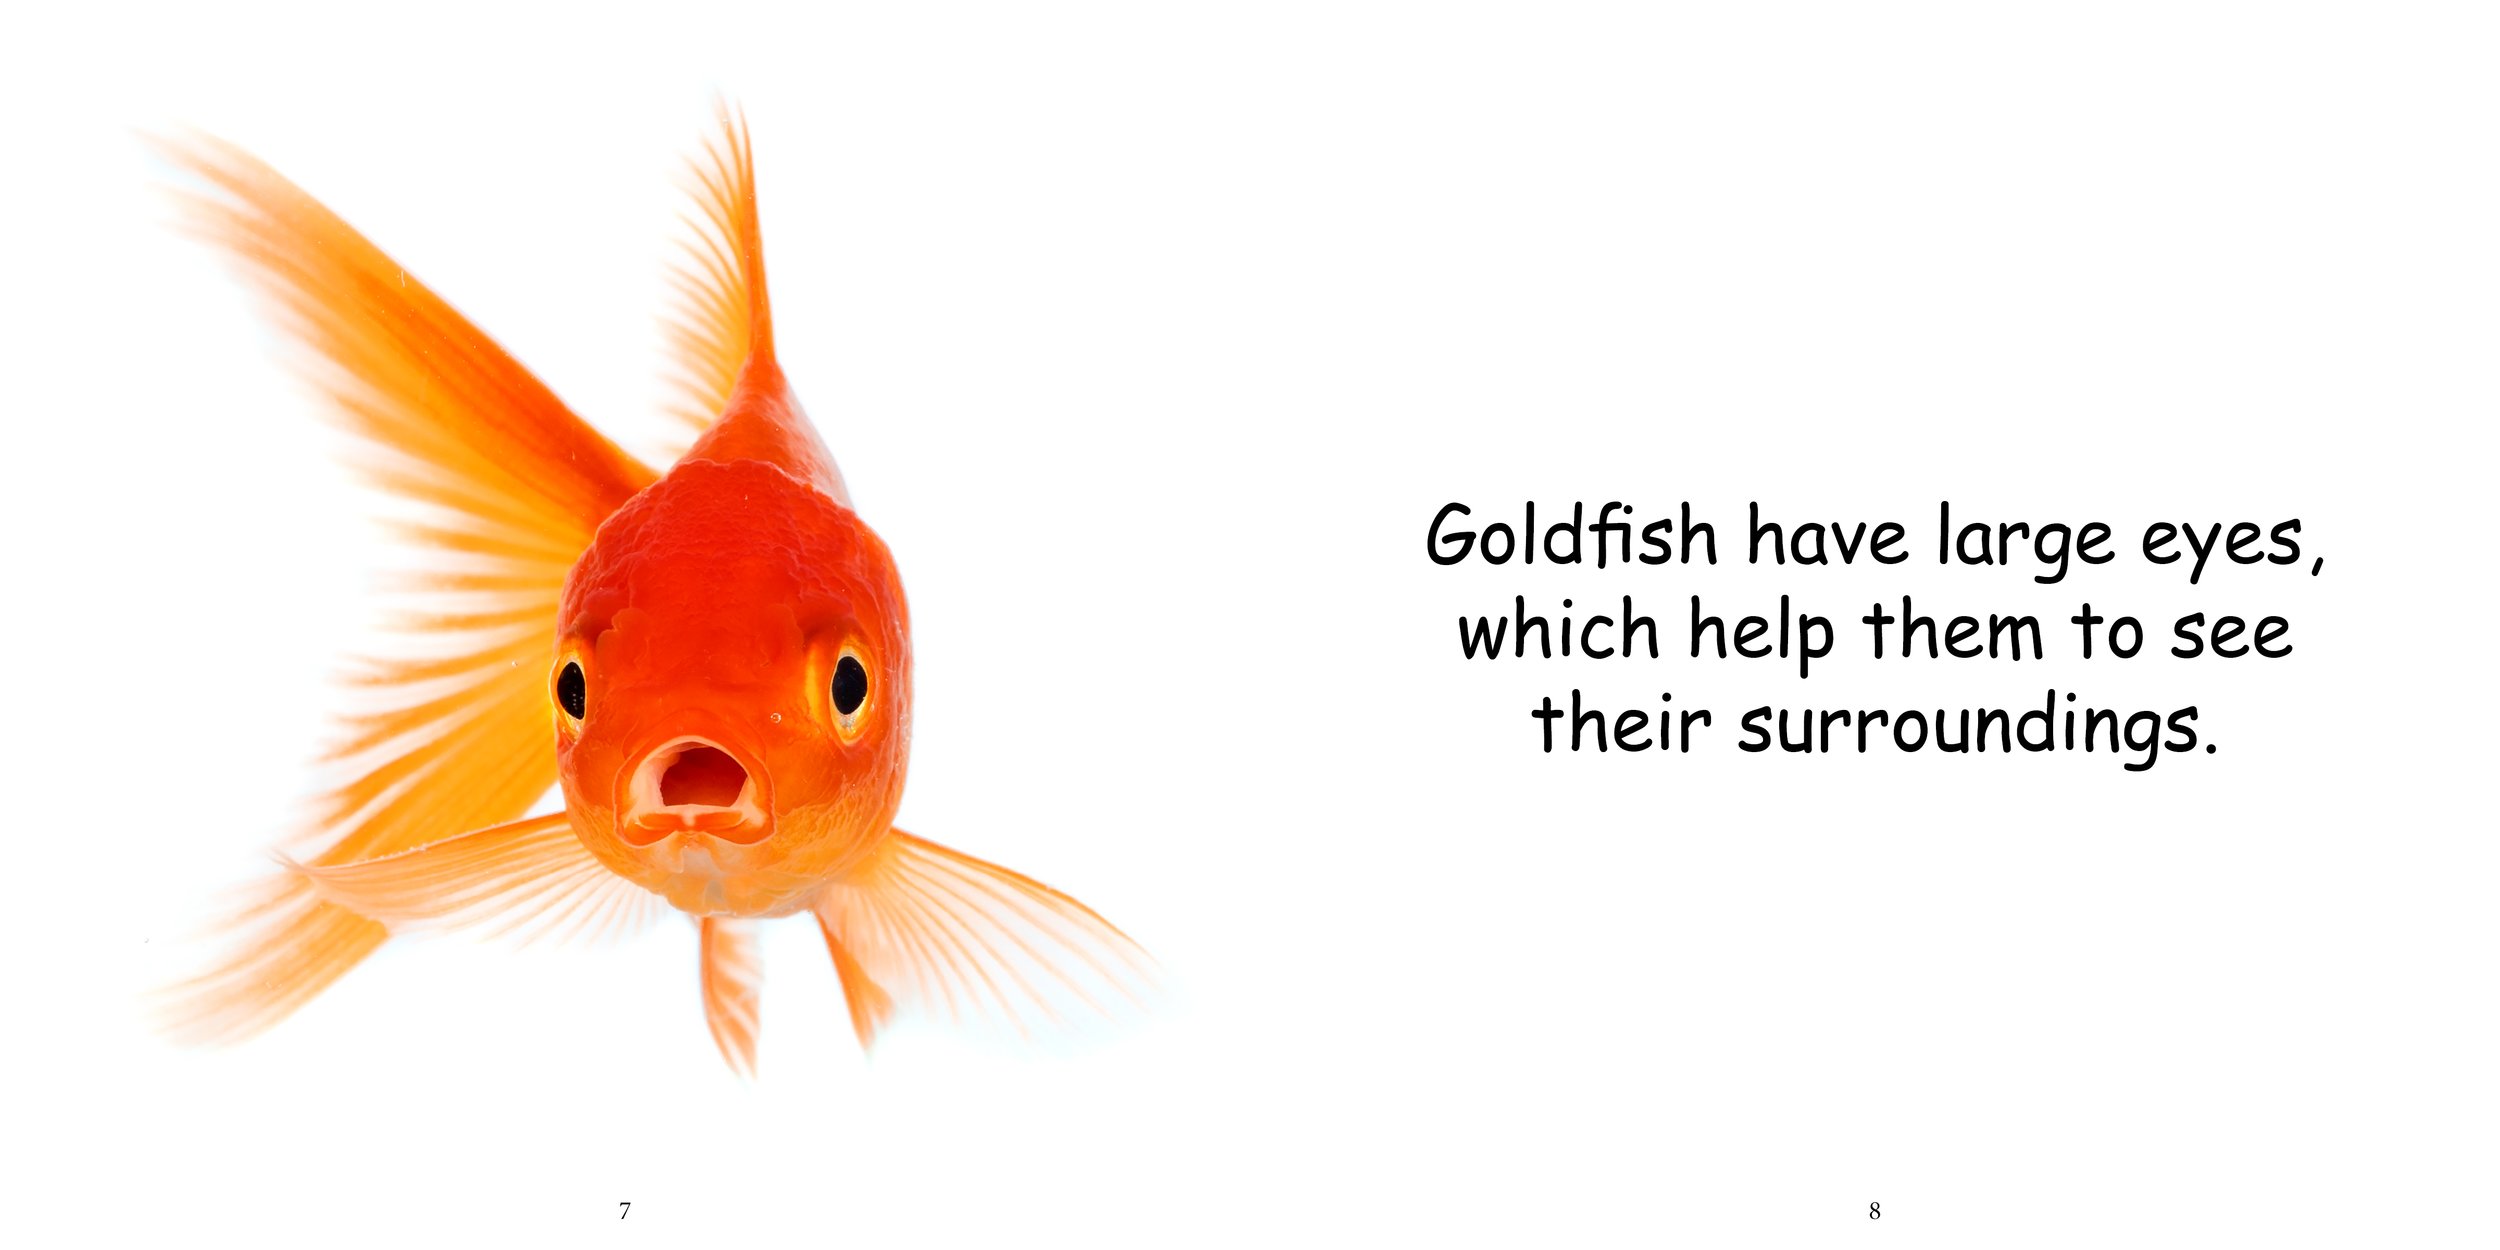 Everything about Goldfish8.jpg